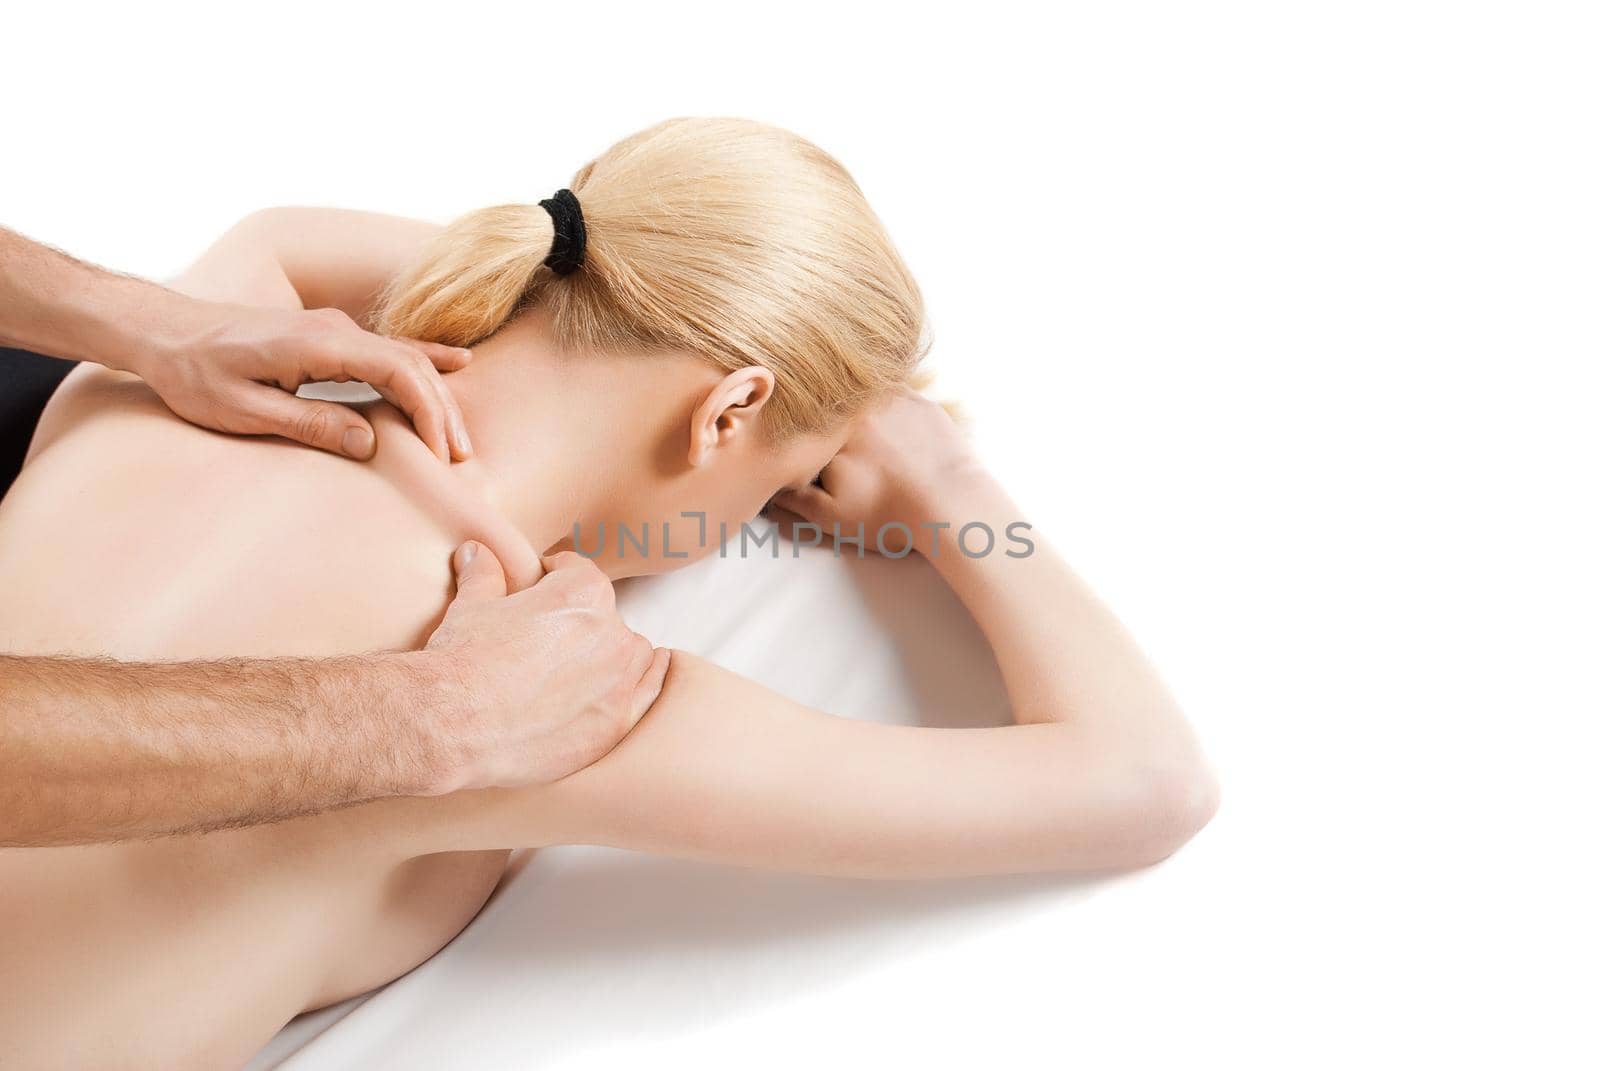 pretty woman getting shoulder and back massage by Julenochek